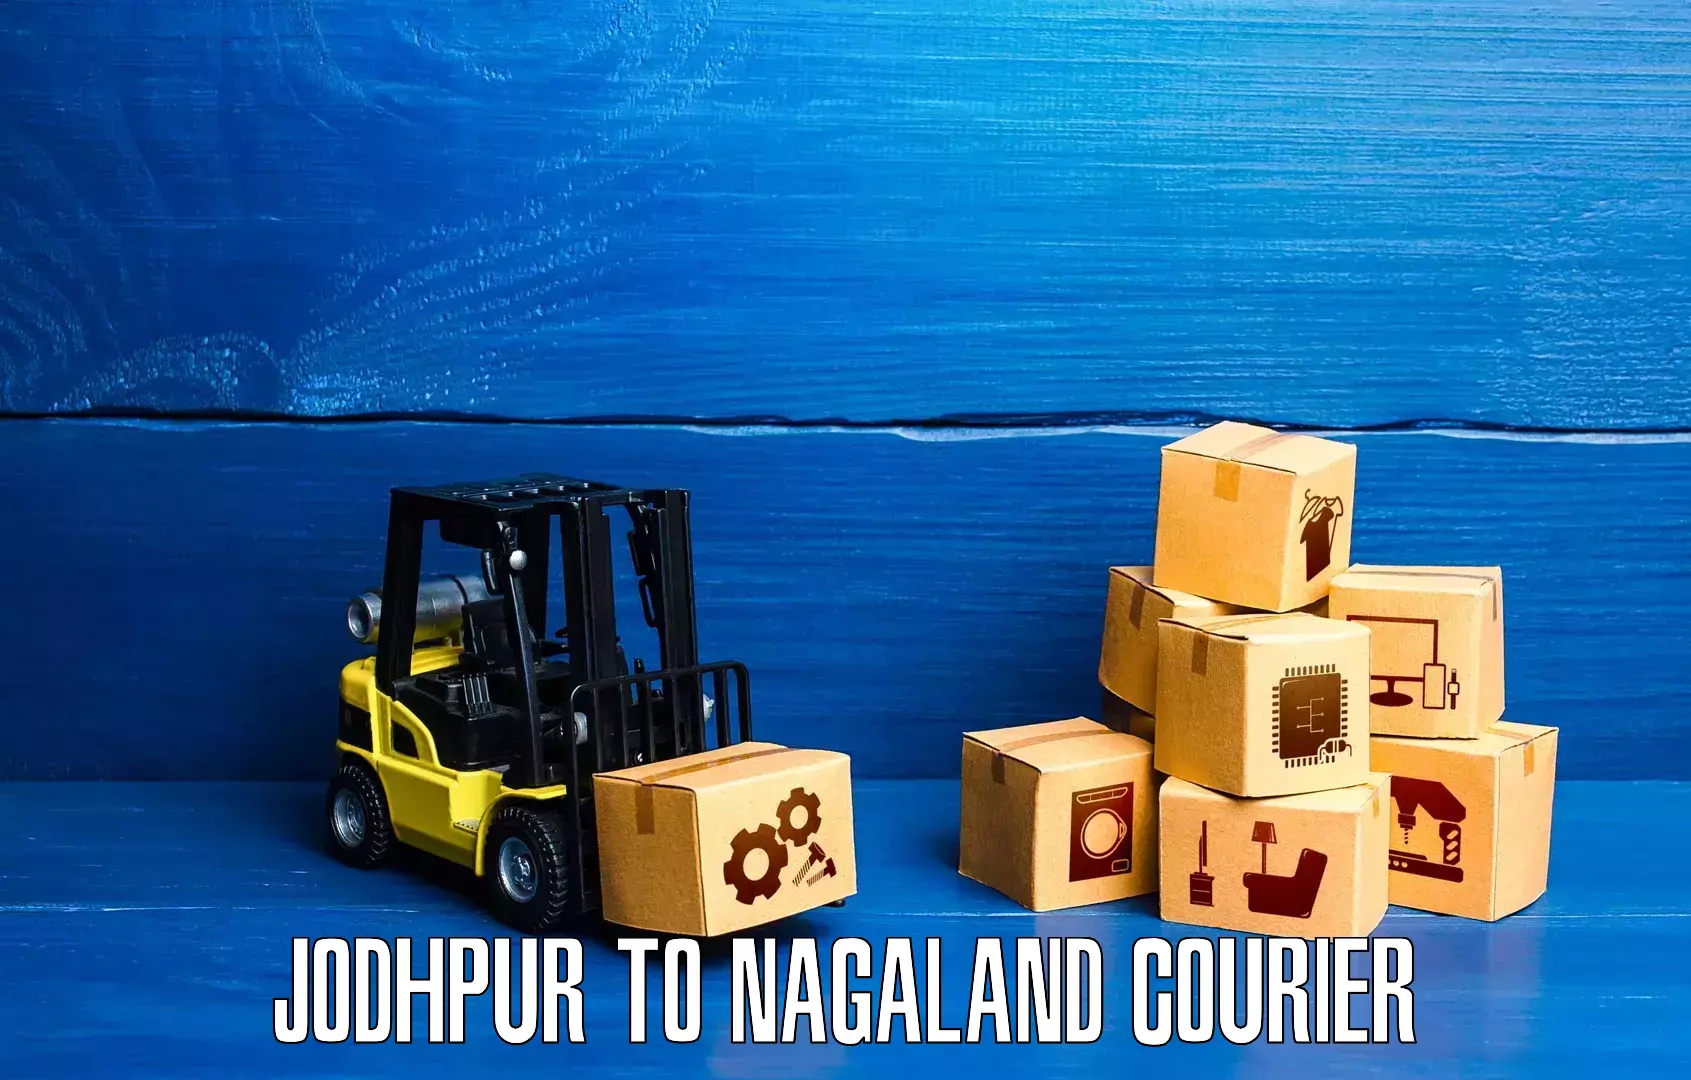 Courier service partnerships Jodhpur to Nagaland